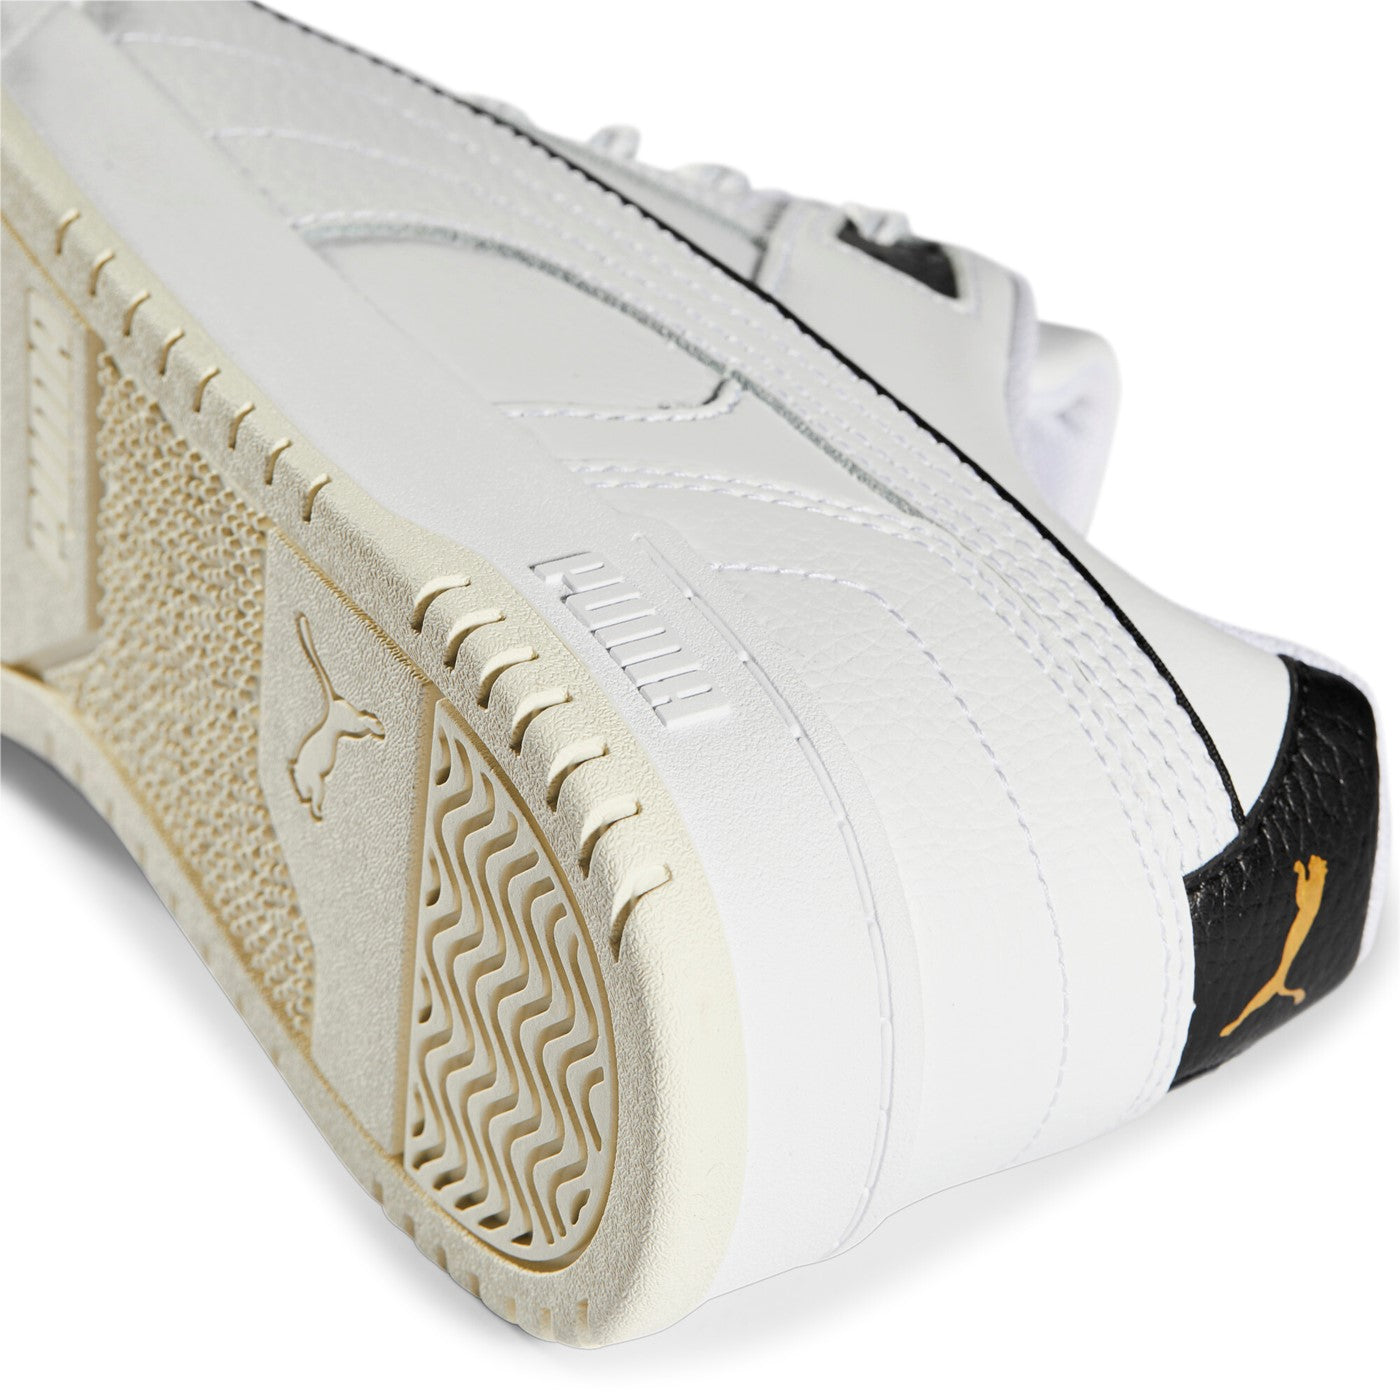 Puma sneakers da uomo RBD Game Low 386373 01 bianco nero oro